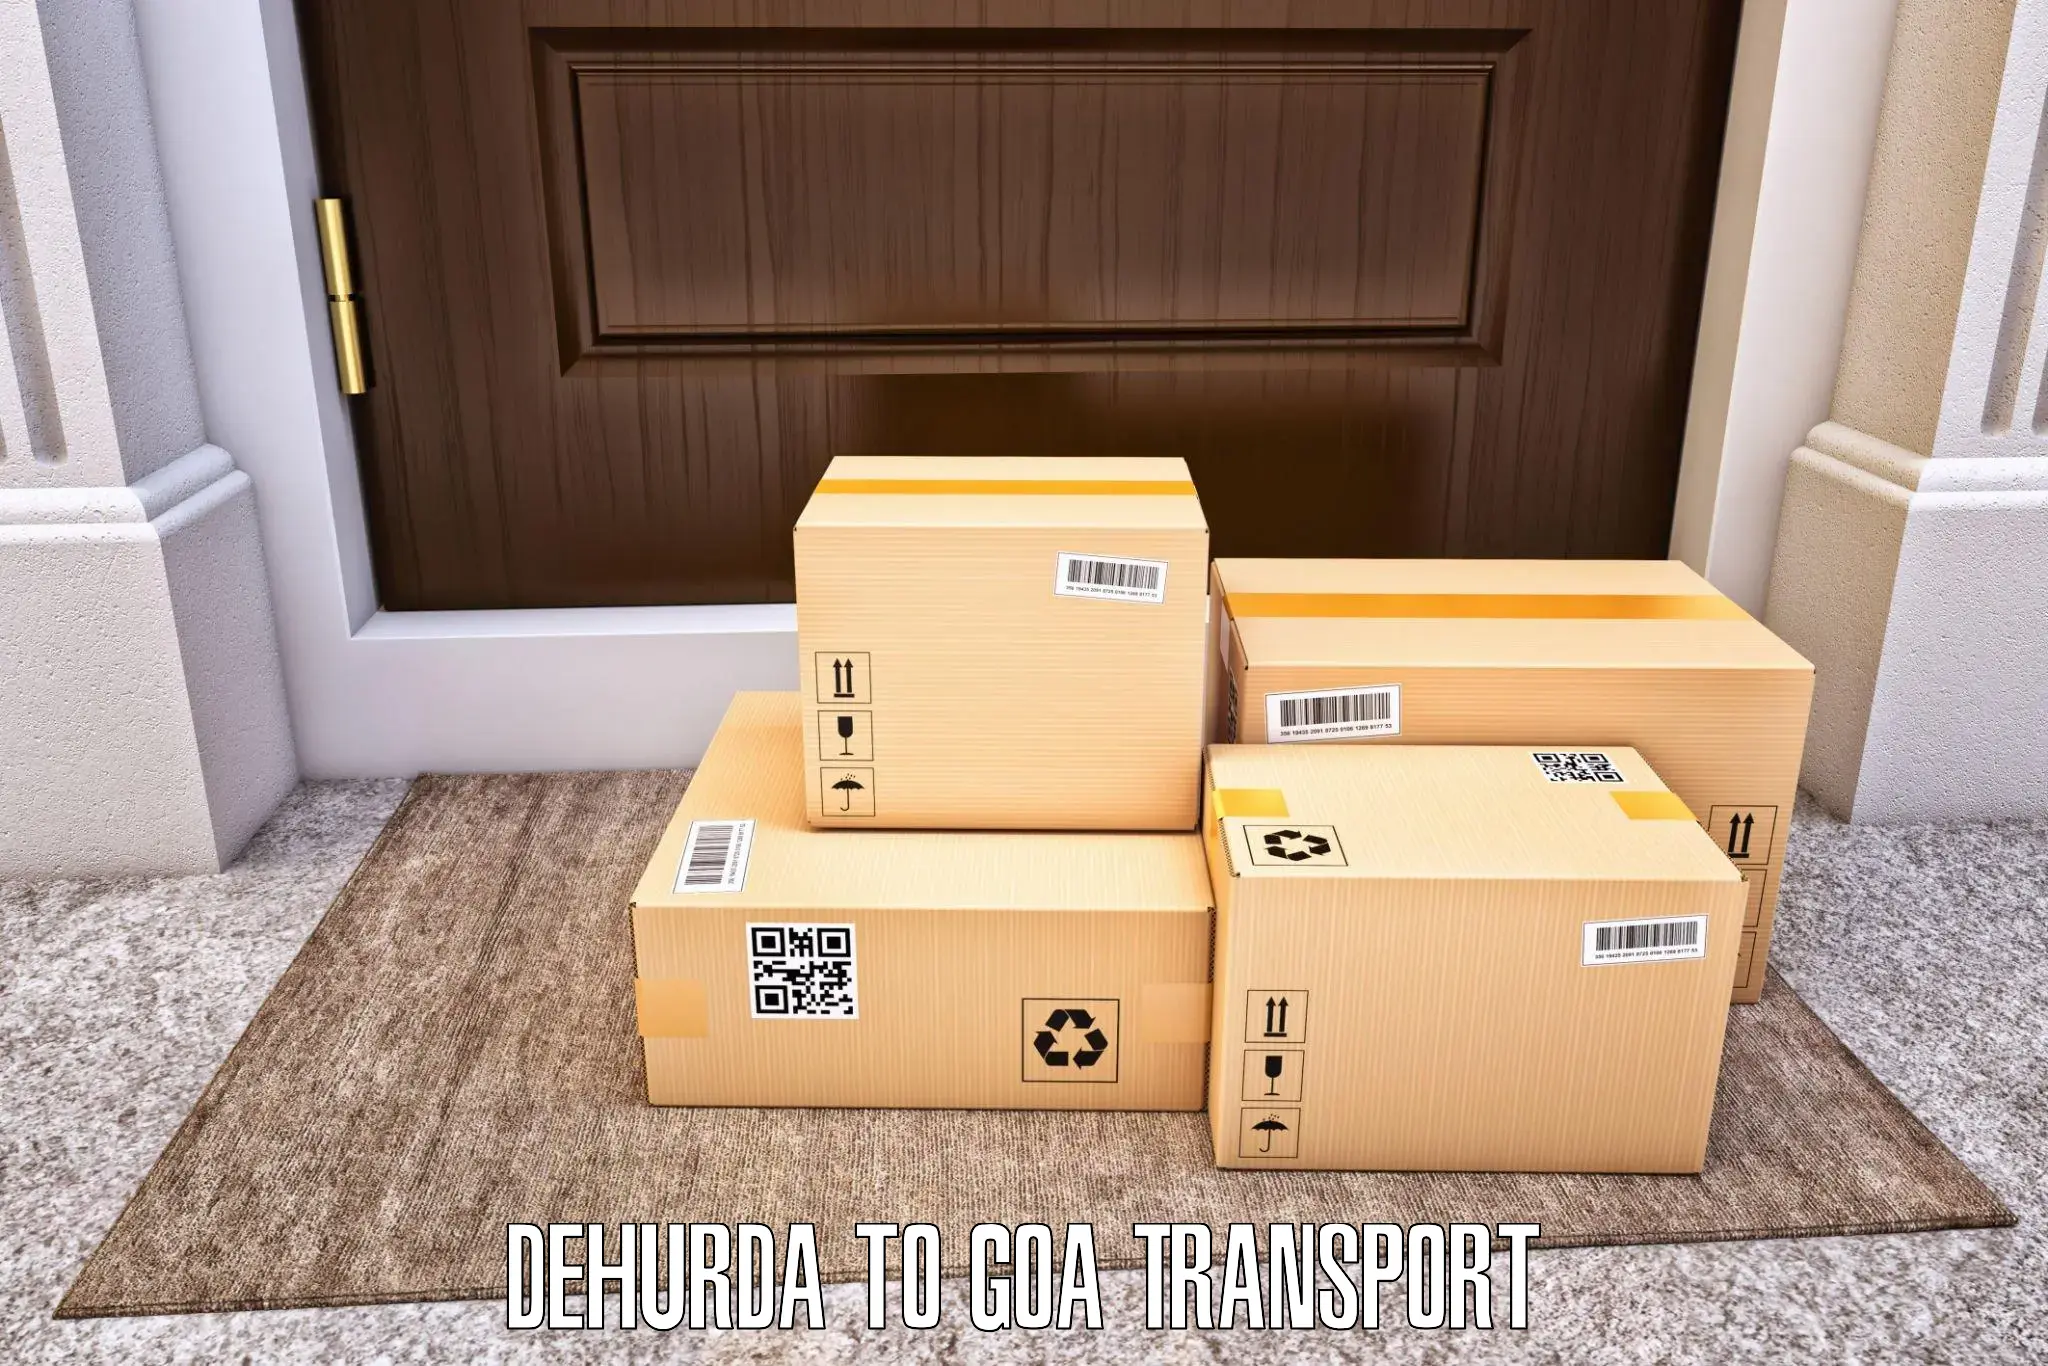 Vehicle transport services Dehurda to Goa University